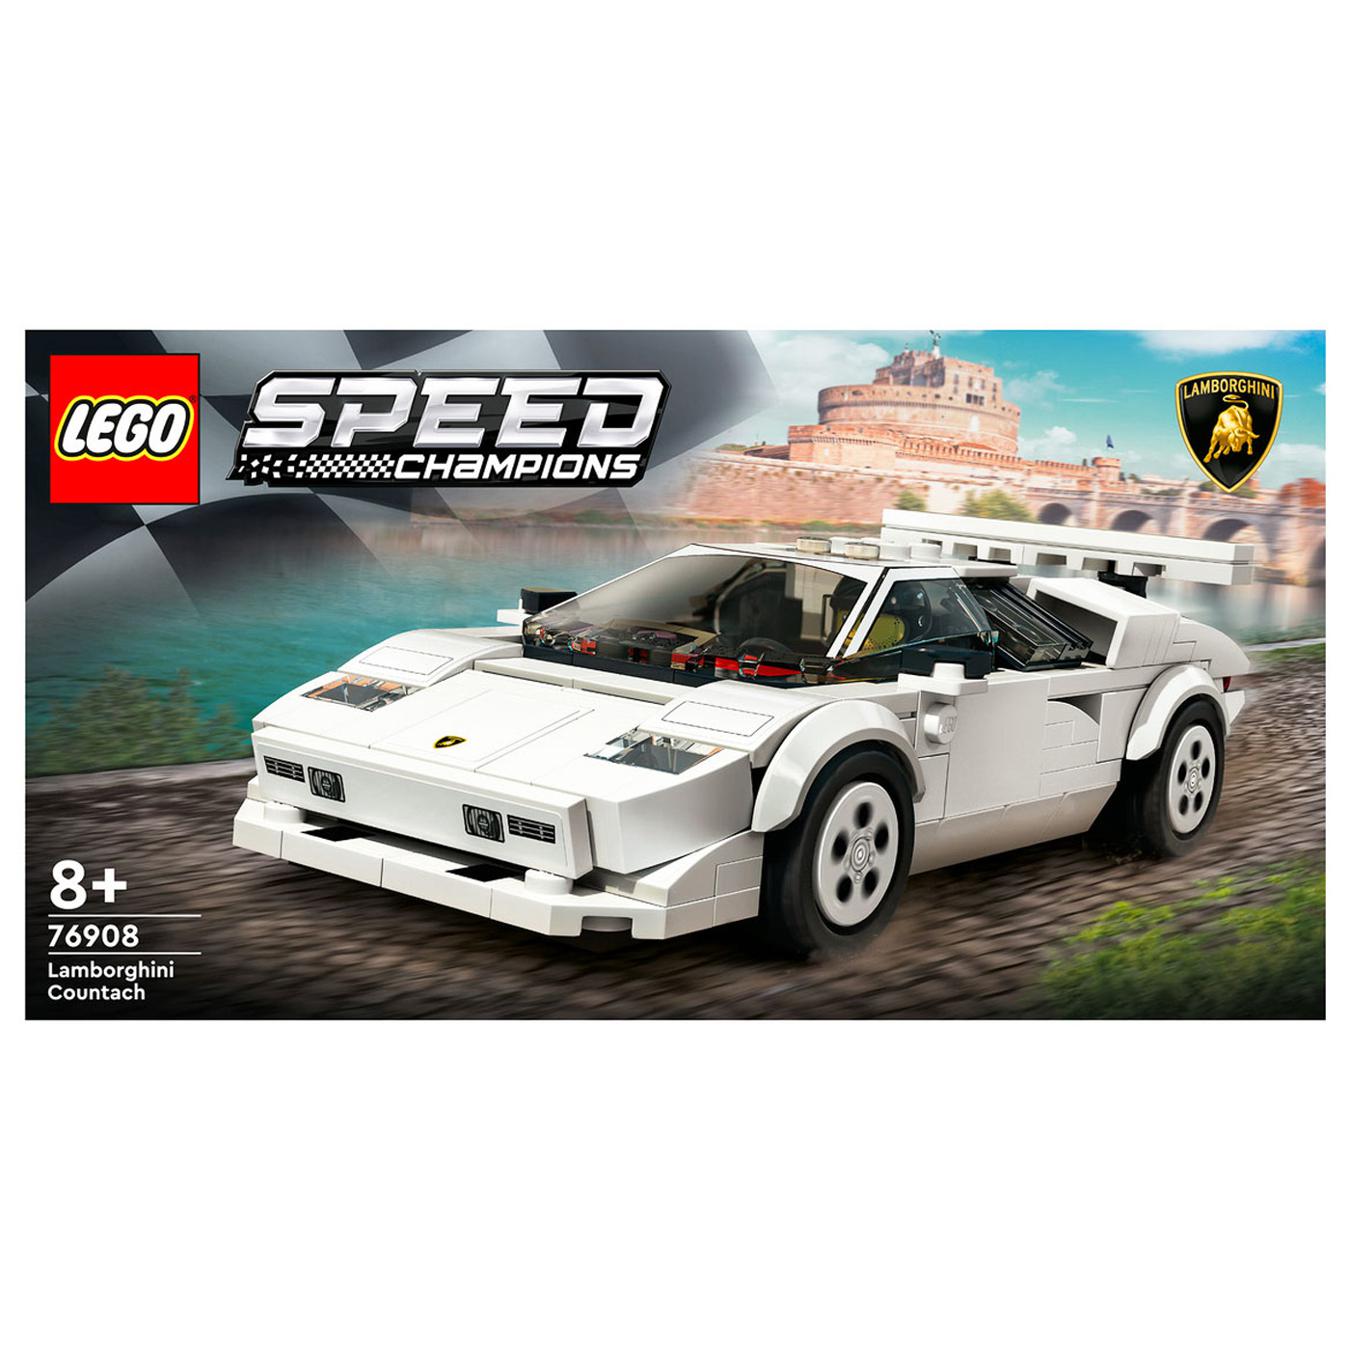 Constructor LEGO Speed Champions 76908 Lamborghini and Countach